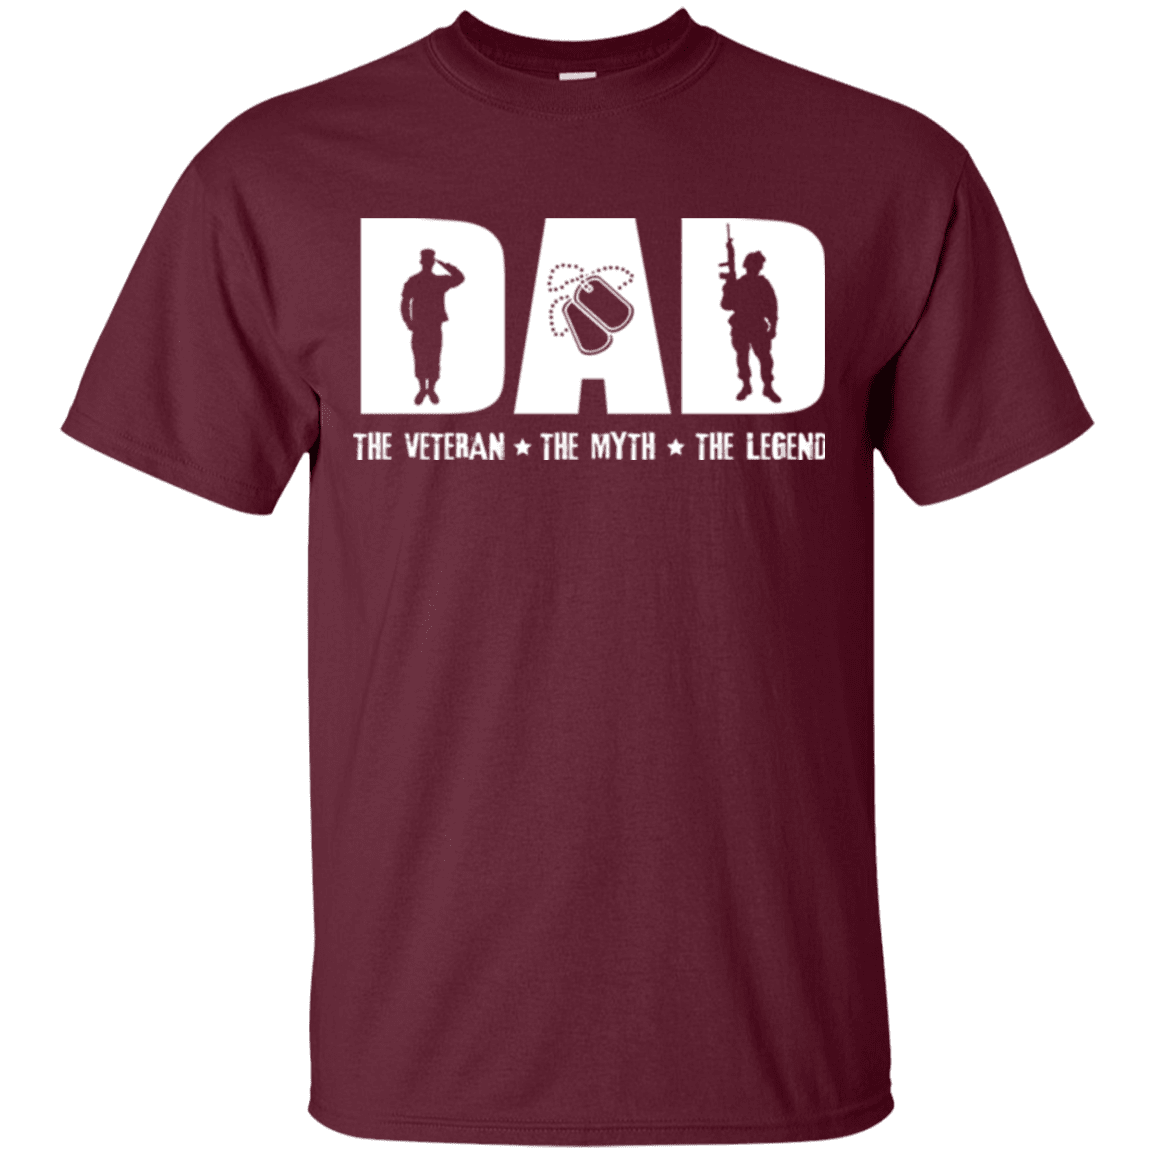 Military T-Shirt "DAD THE VETERAN - THE MYTH - THE LEGEND"-TShirt-General-Veterans Nation